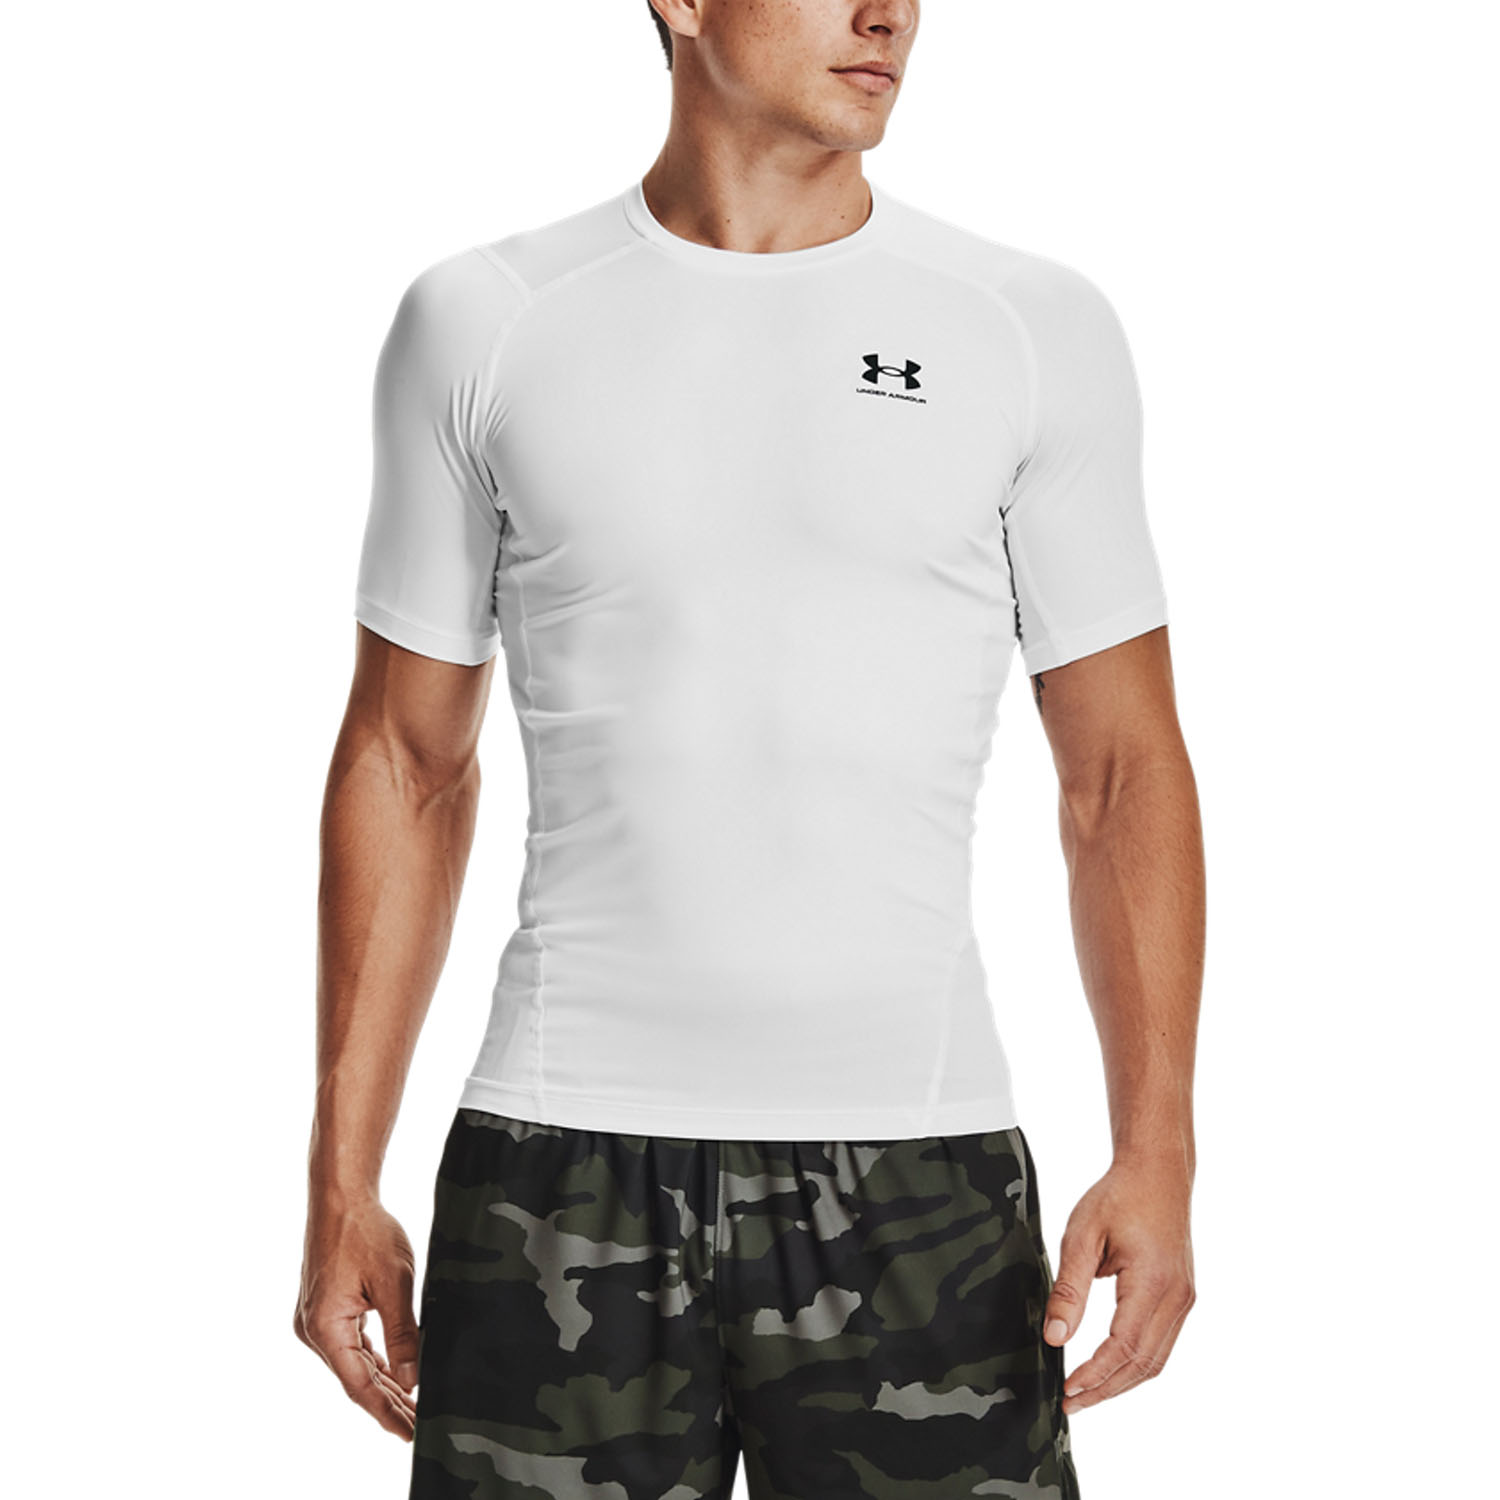 Under Armour HeatGear Compression Camiseta - White/Black